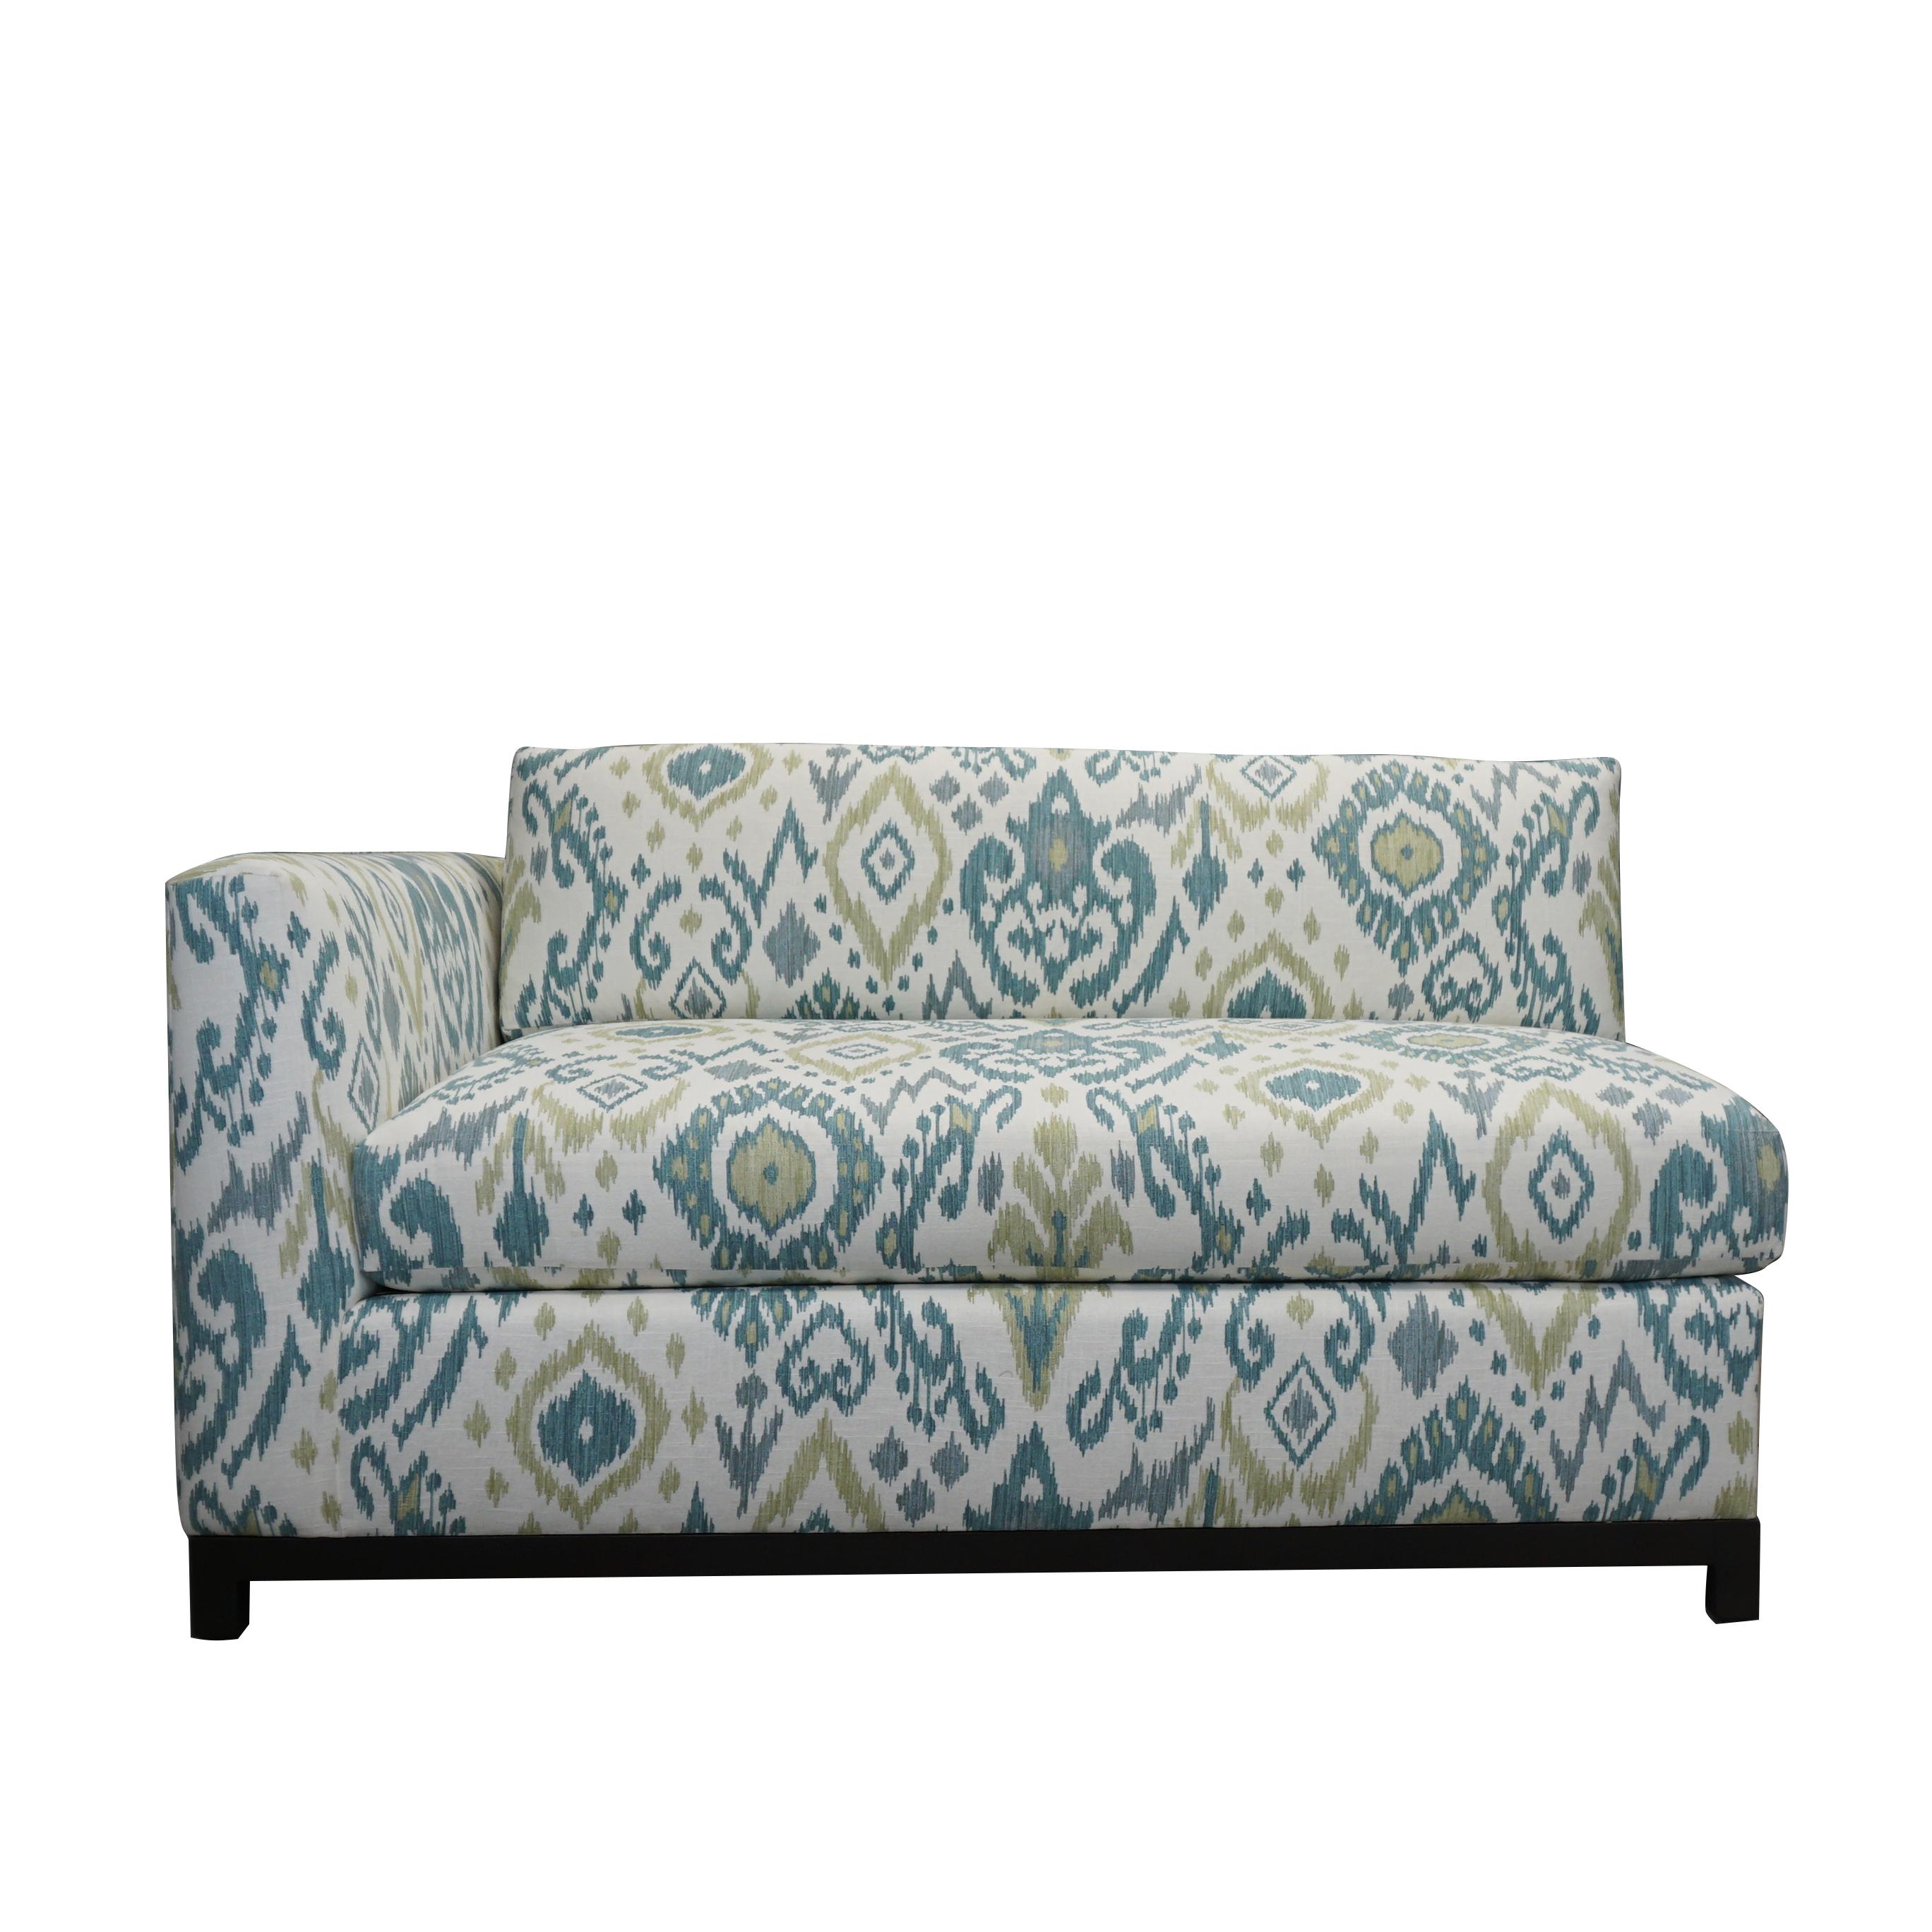 Hardwood Custom Sectional Sofa with Wood Base For Sale